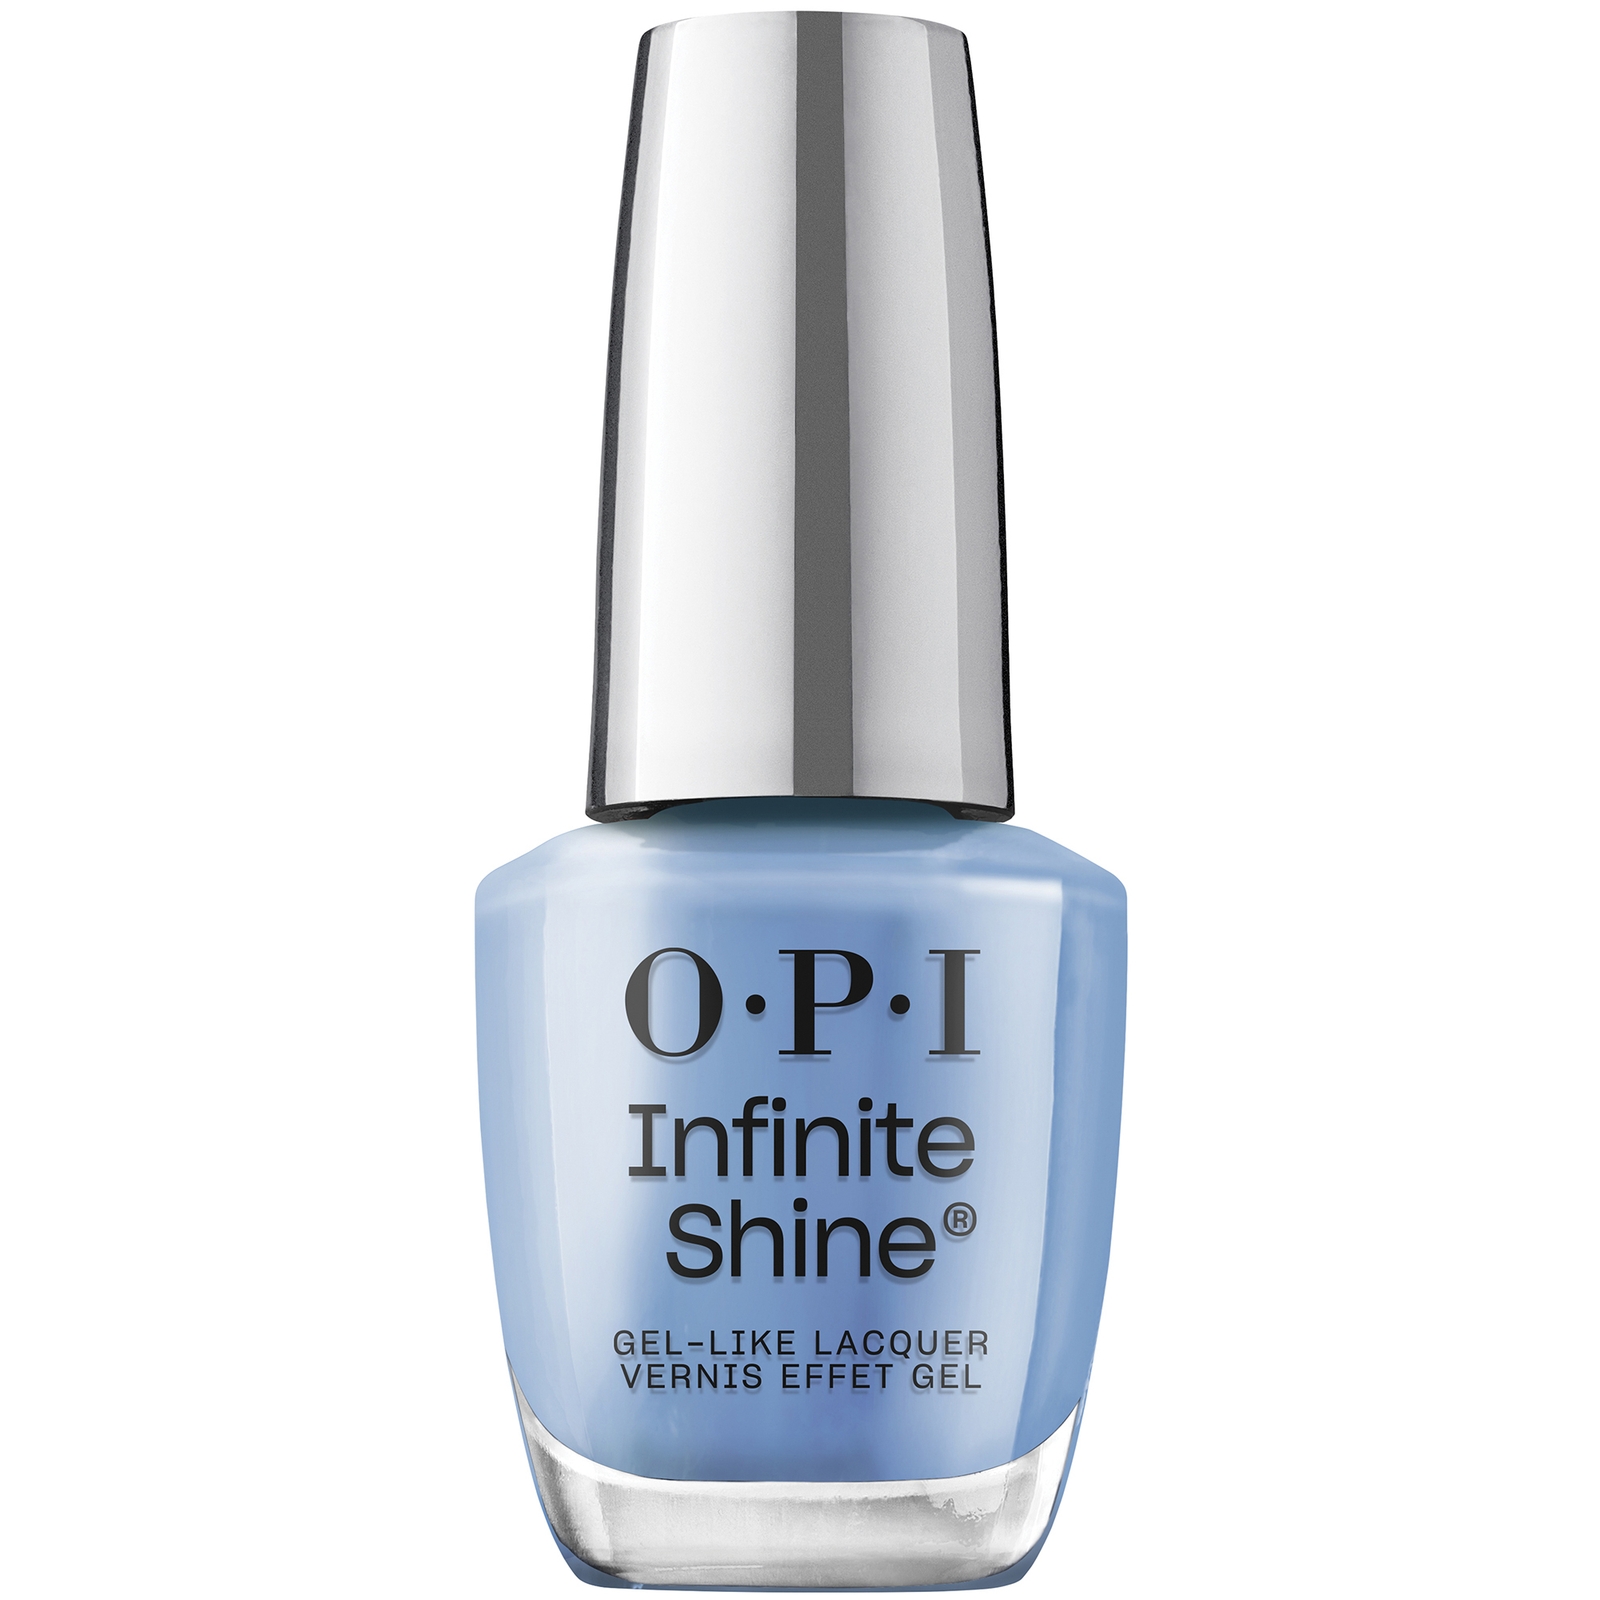 OPI Infinite Shine Long-Wear Nail Polish - Strongevity 15ml